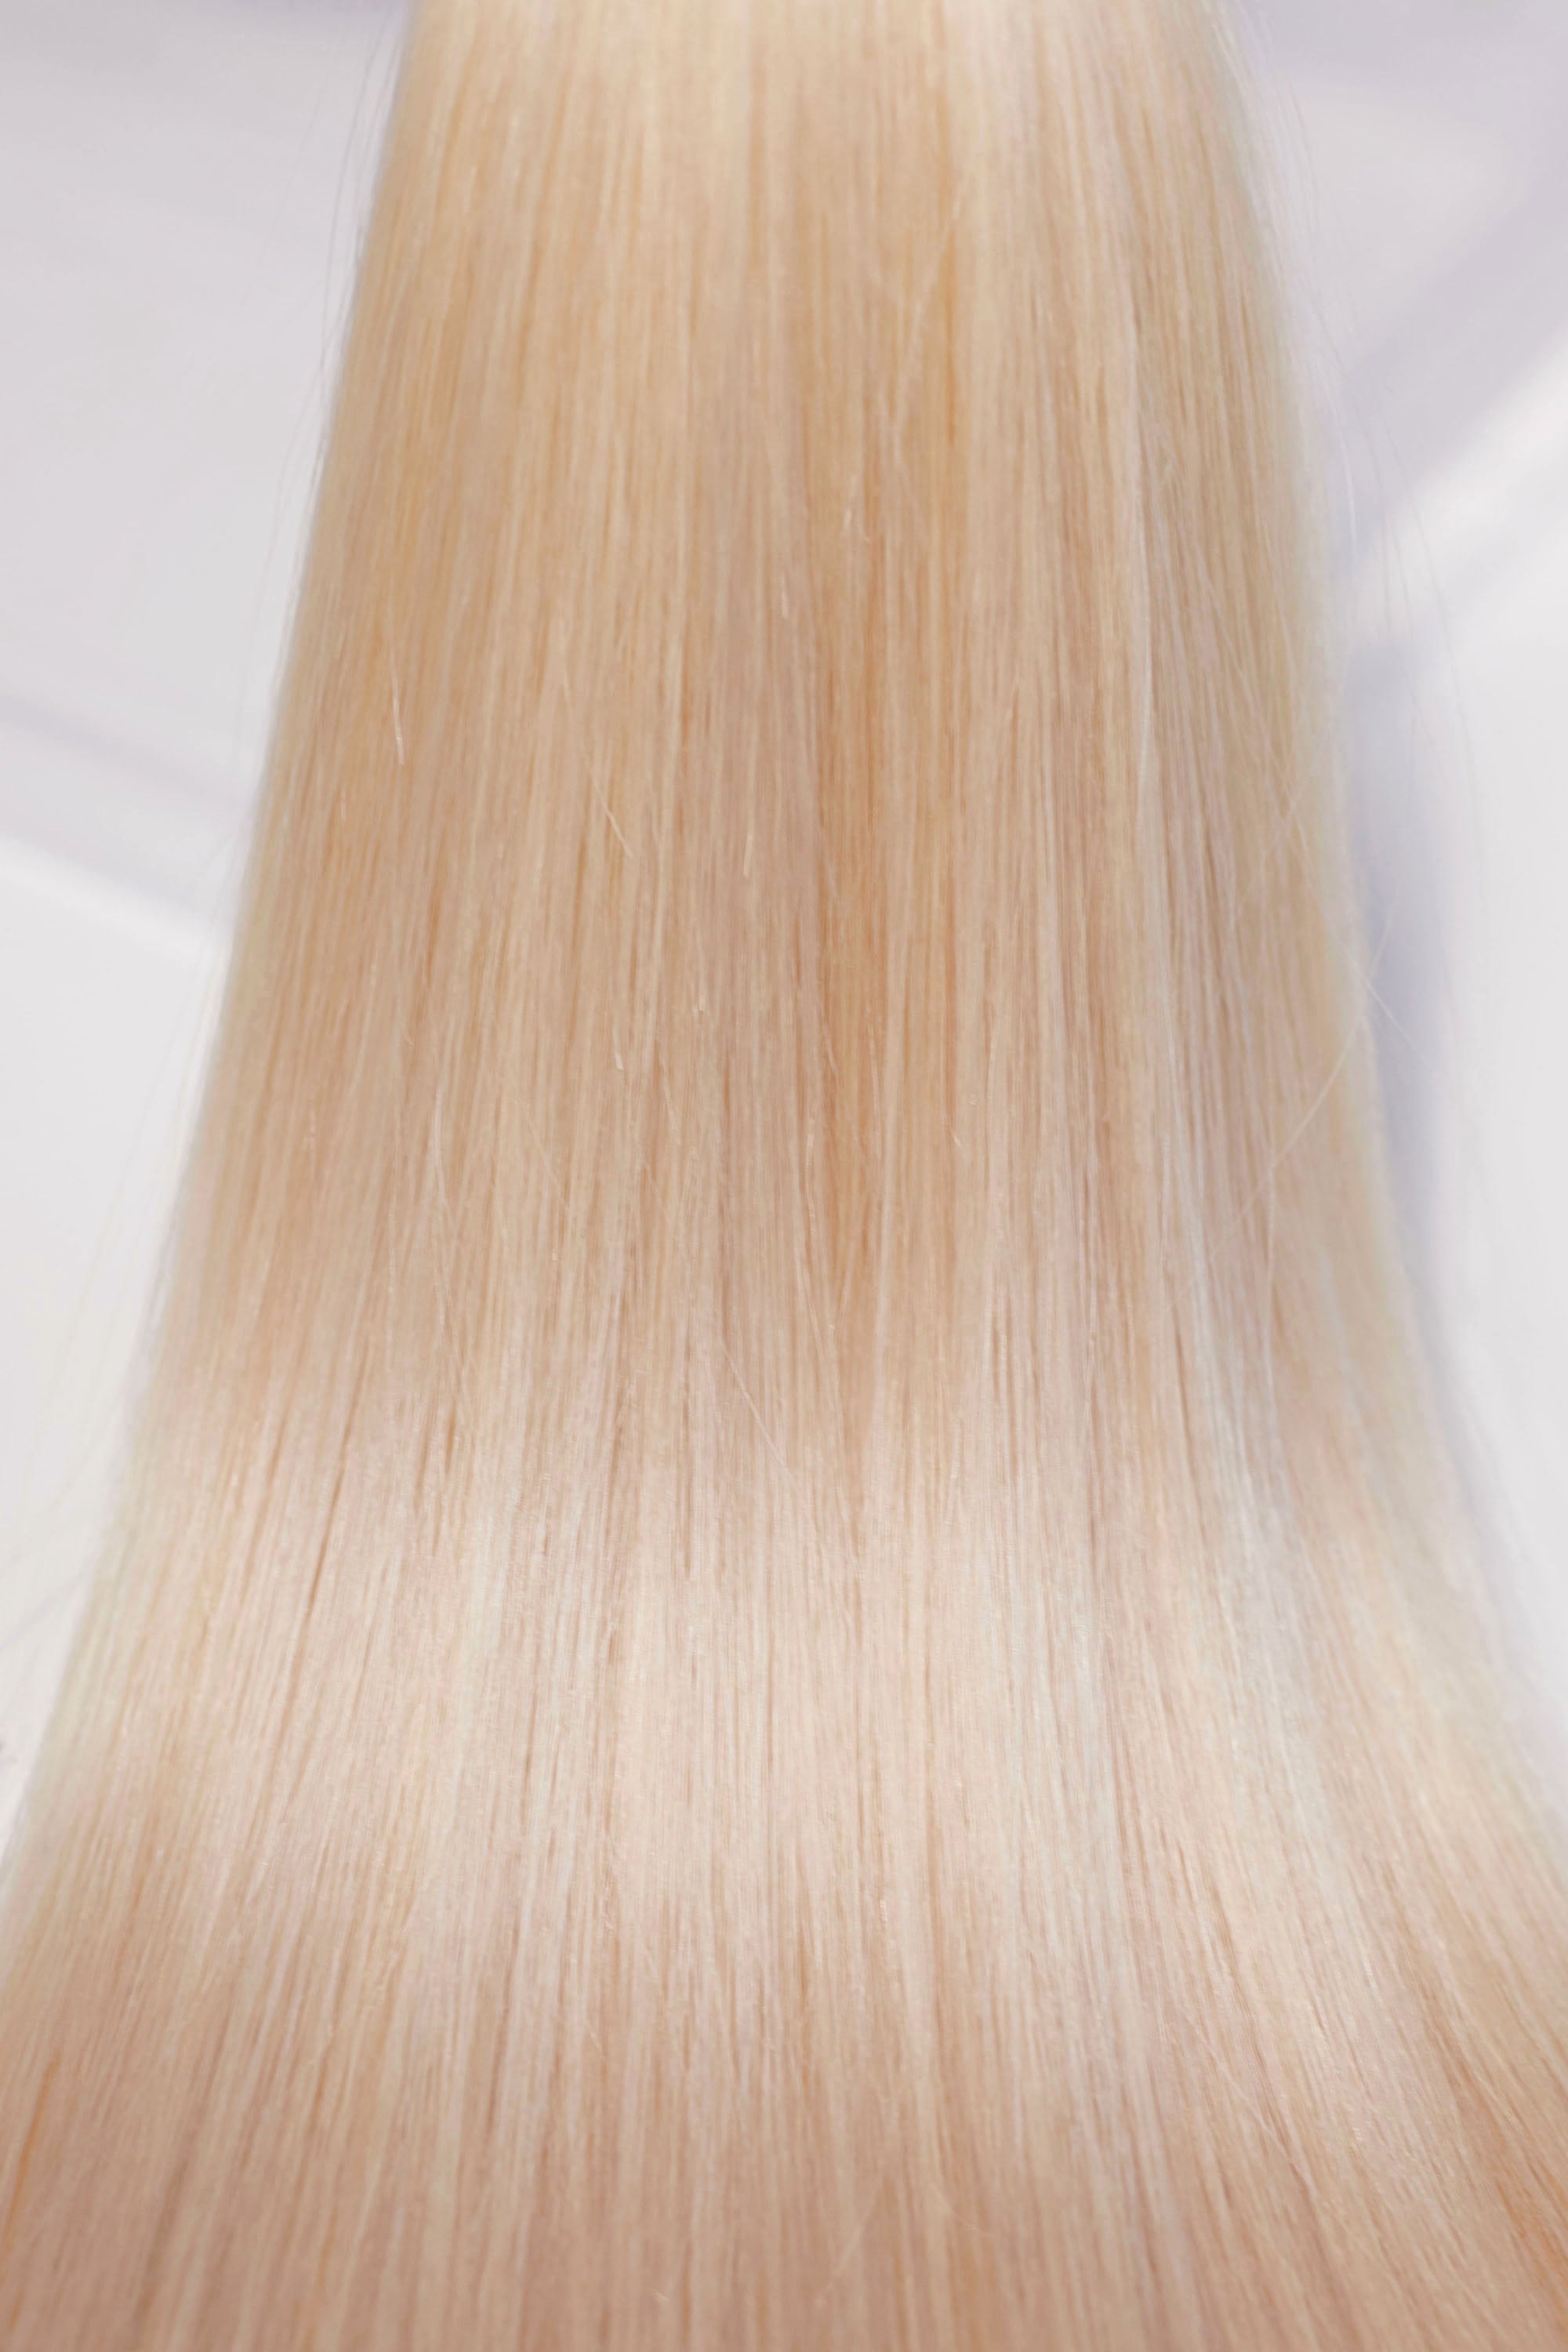 Behair professional Keratin Tip "Premium" 26" (65cm) Natural Straight Platinum Blond #60 - 25g (Standart - 0.7g each pcs) hair extensions